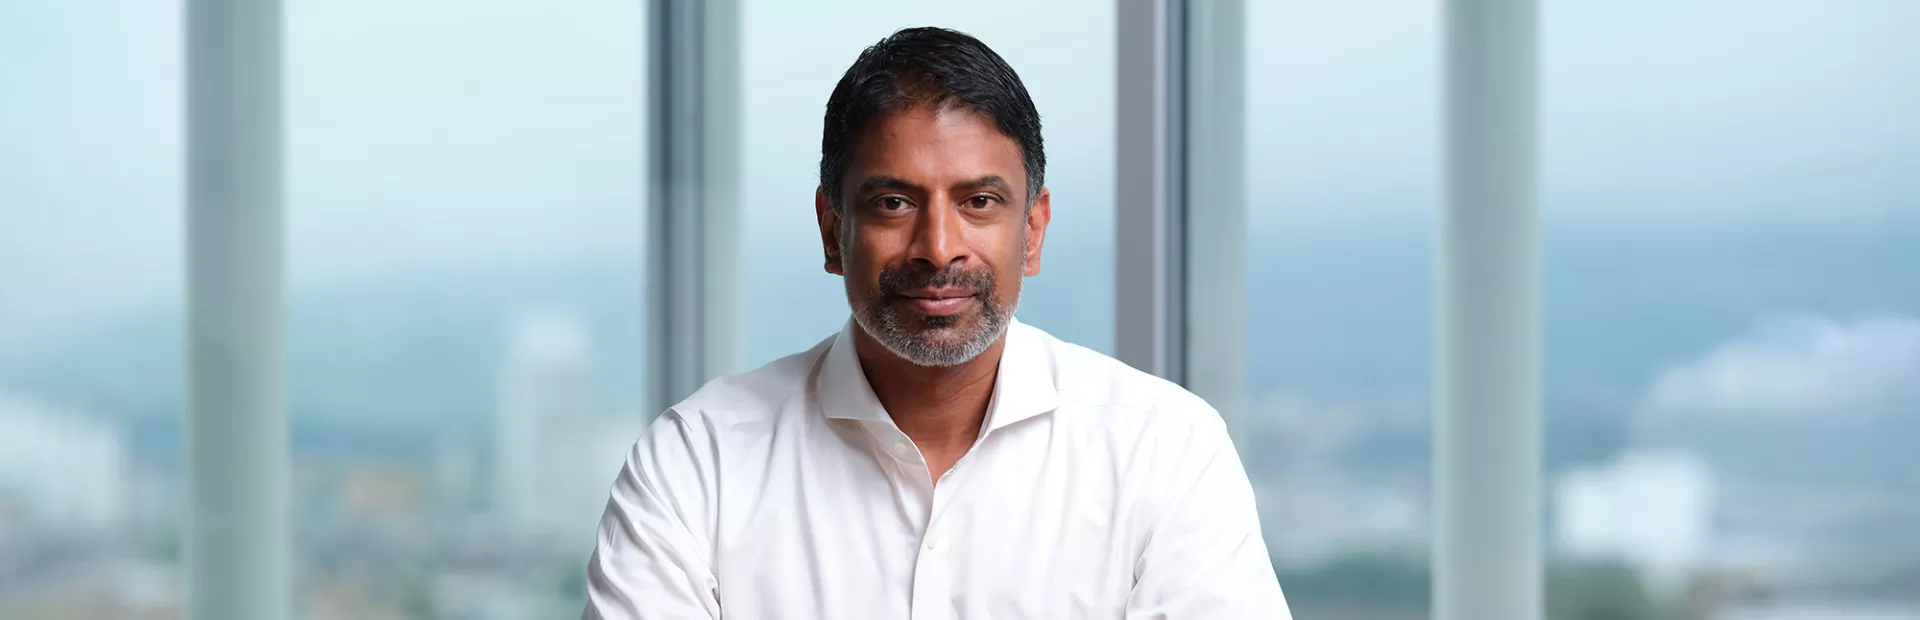 Vas Narasimhan, CEO of Novartis